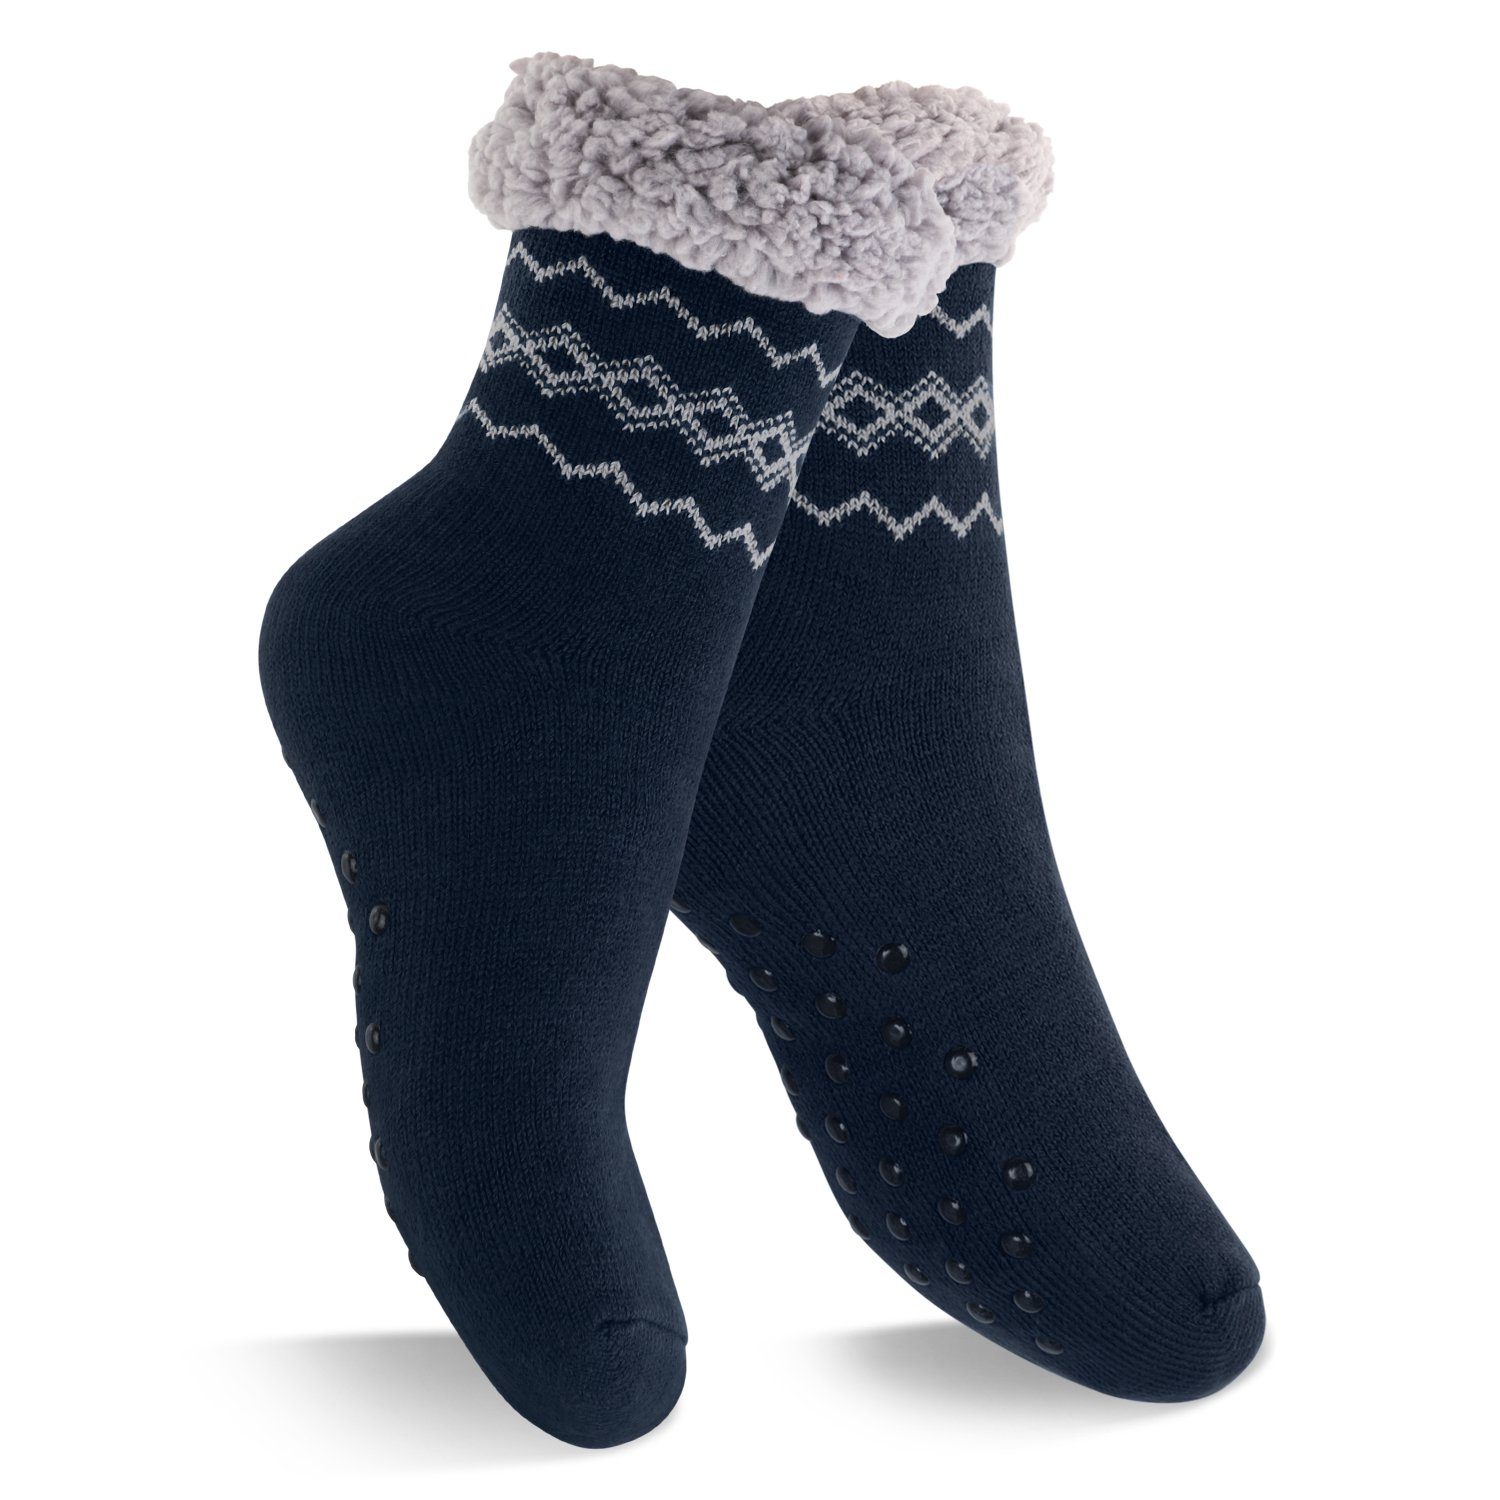 (1/2 & ABS-Socken Footstar Navy Herren Kuschelsocken Damen Winter für Paar) Haussocken